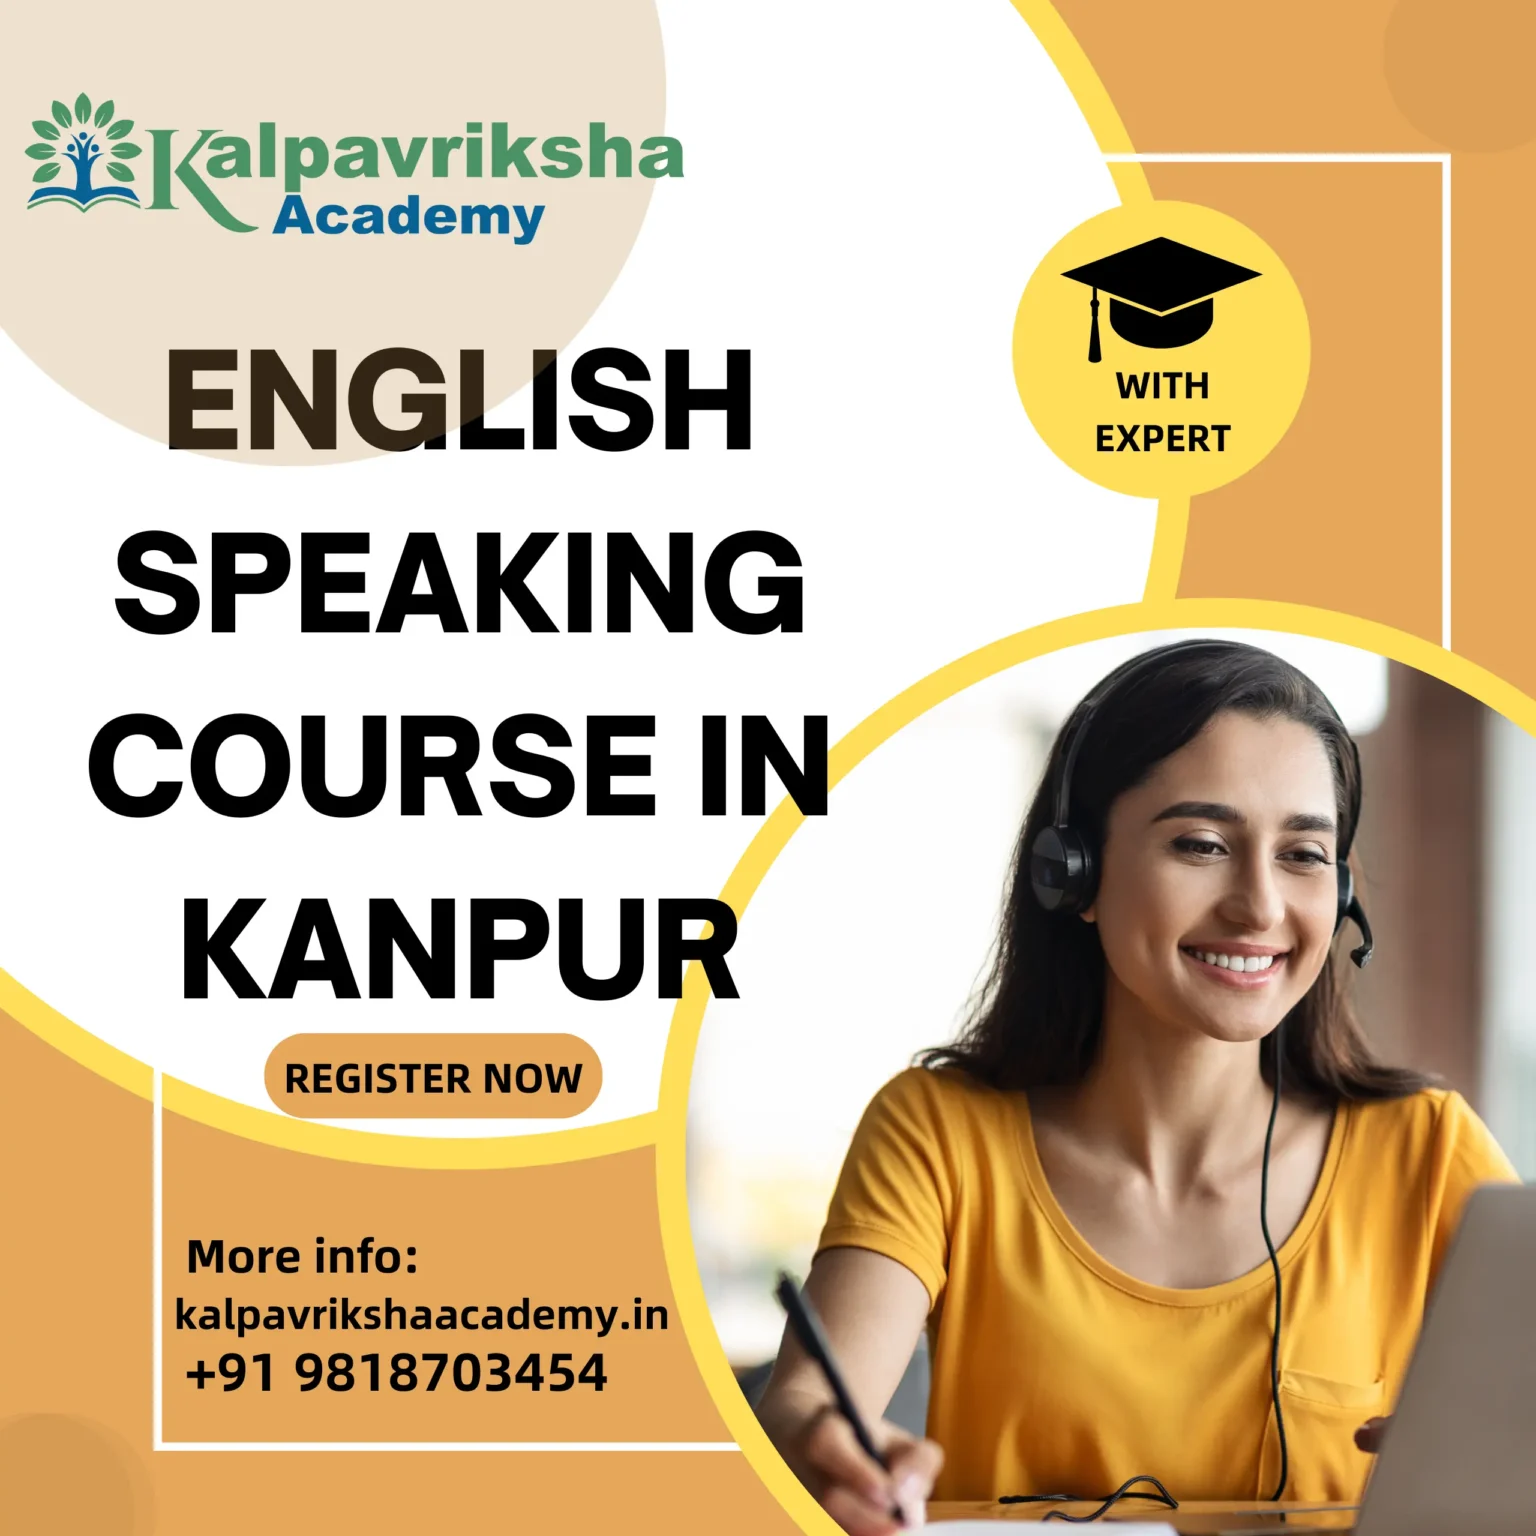 English Speaking Course in Kanpur - Kalpavriksha Academy